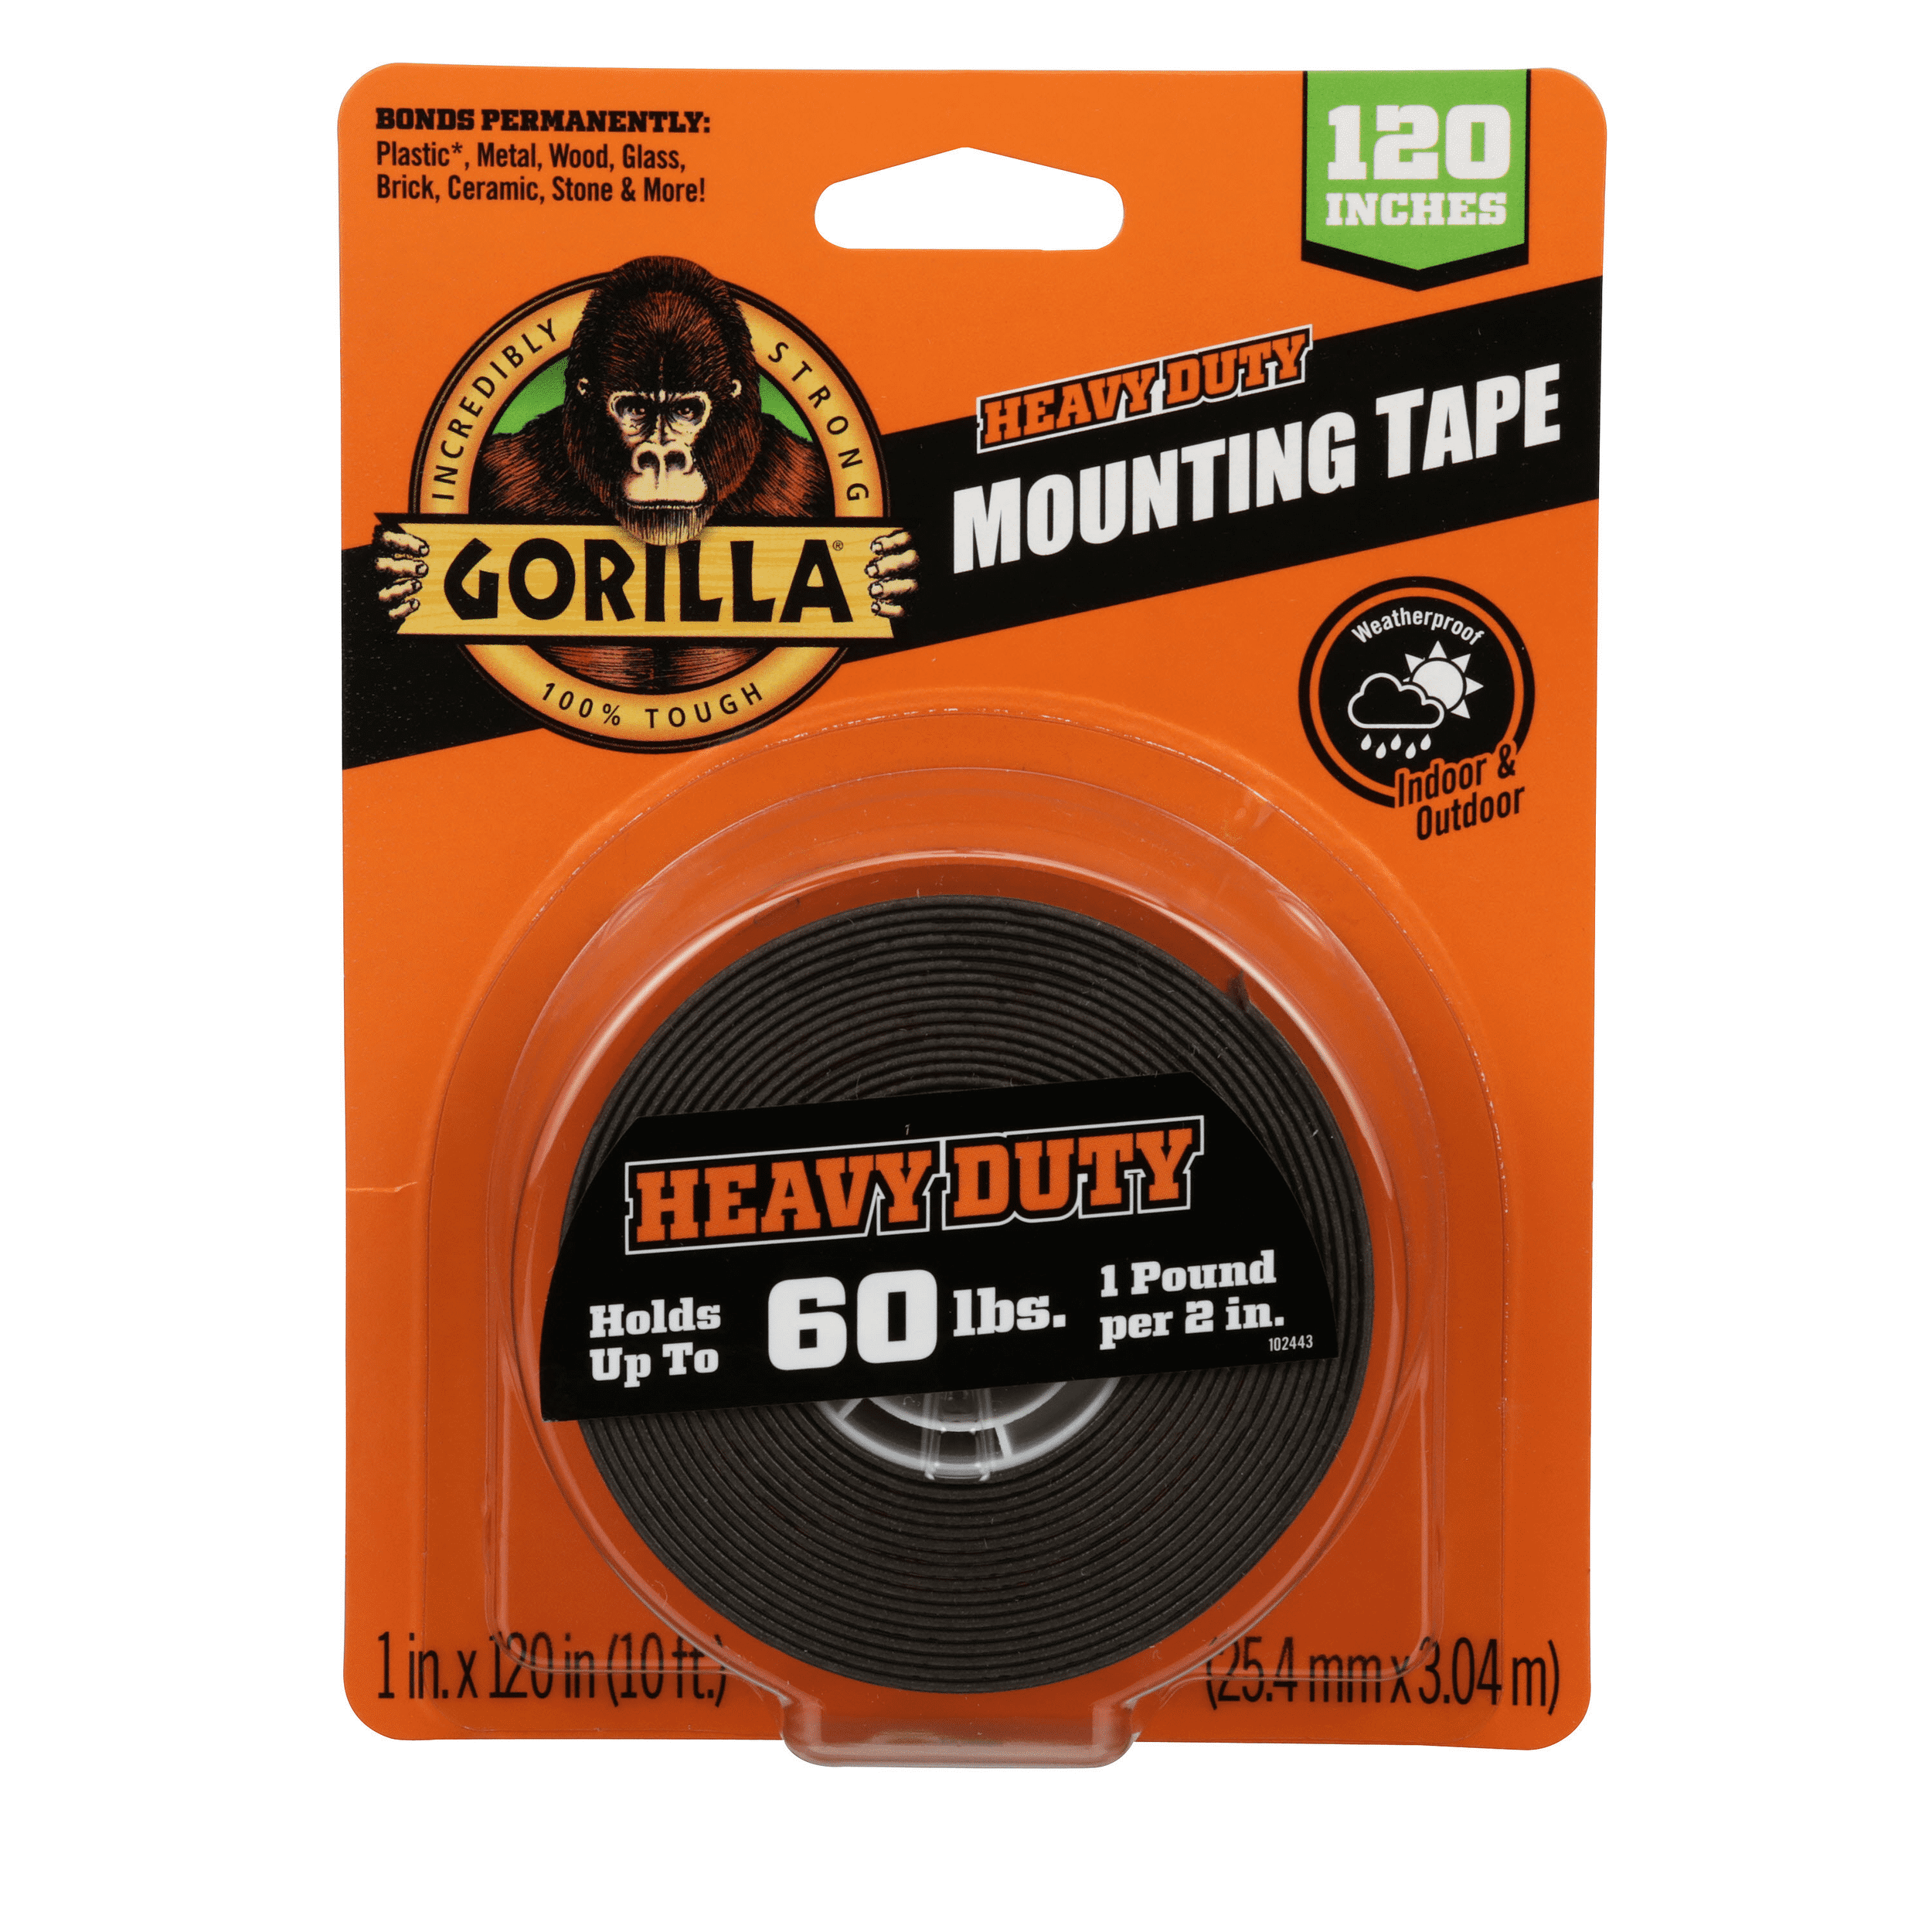 Double-Sided Adhesive PE Foam Tape 25mmx5M (Black)